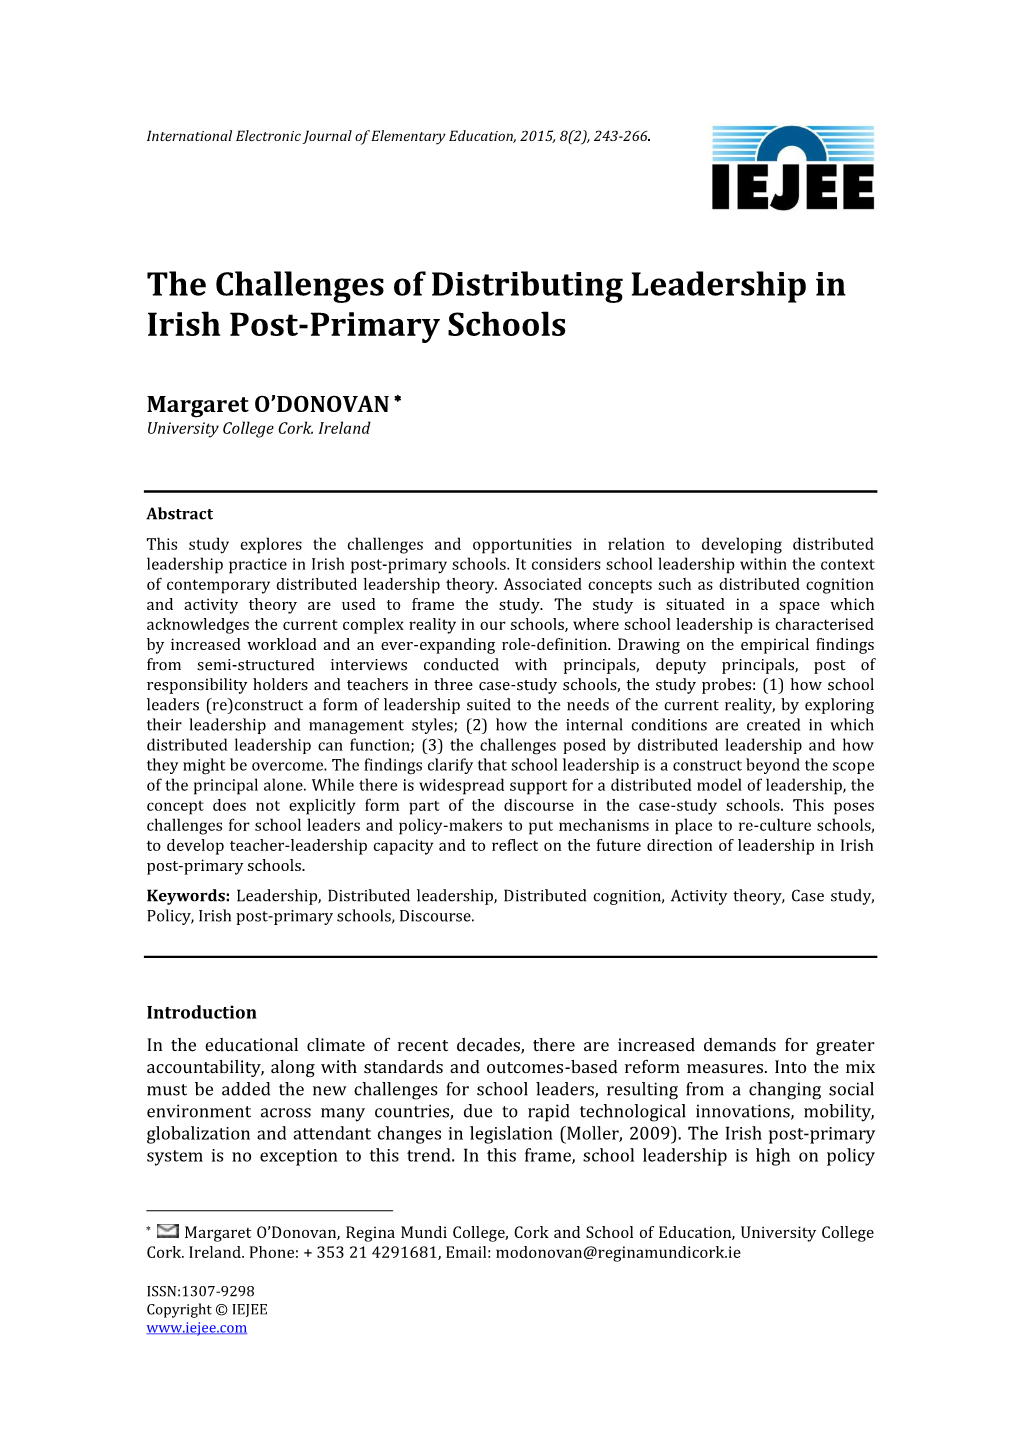 The Challenges of Distributing Leadership in Irish Post-Primary Schools